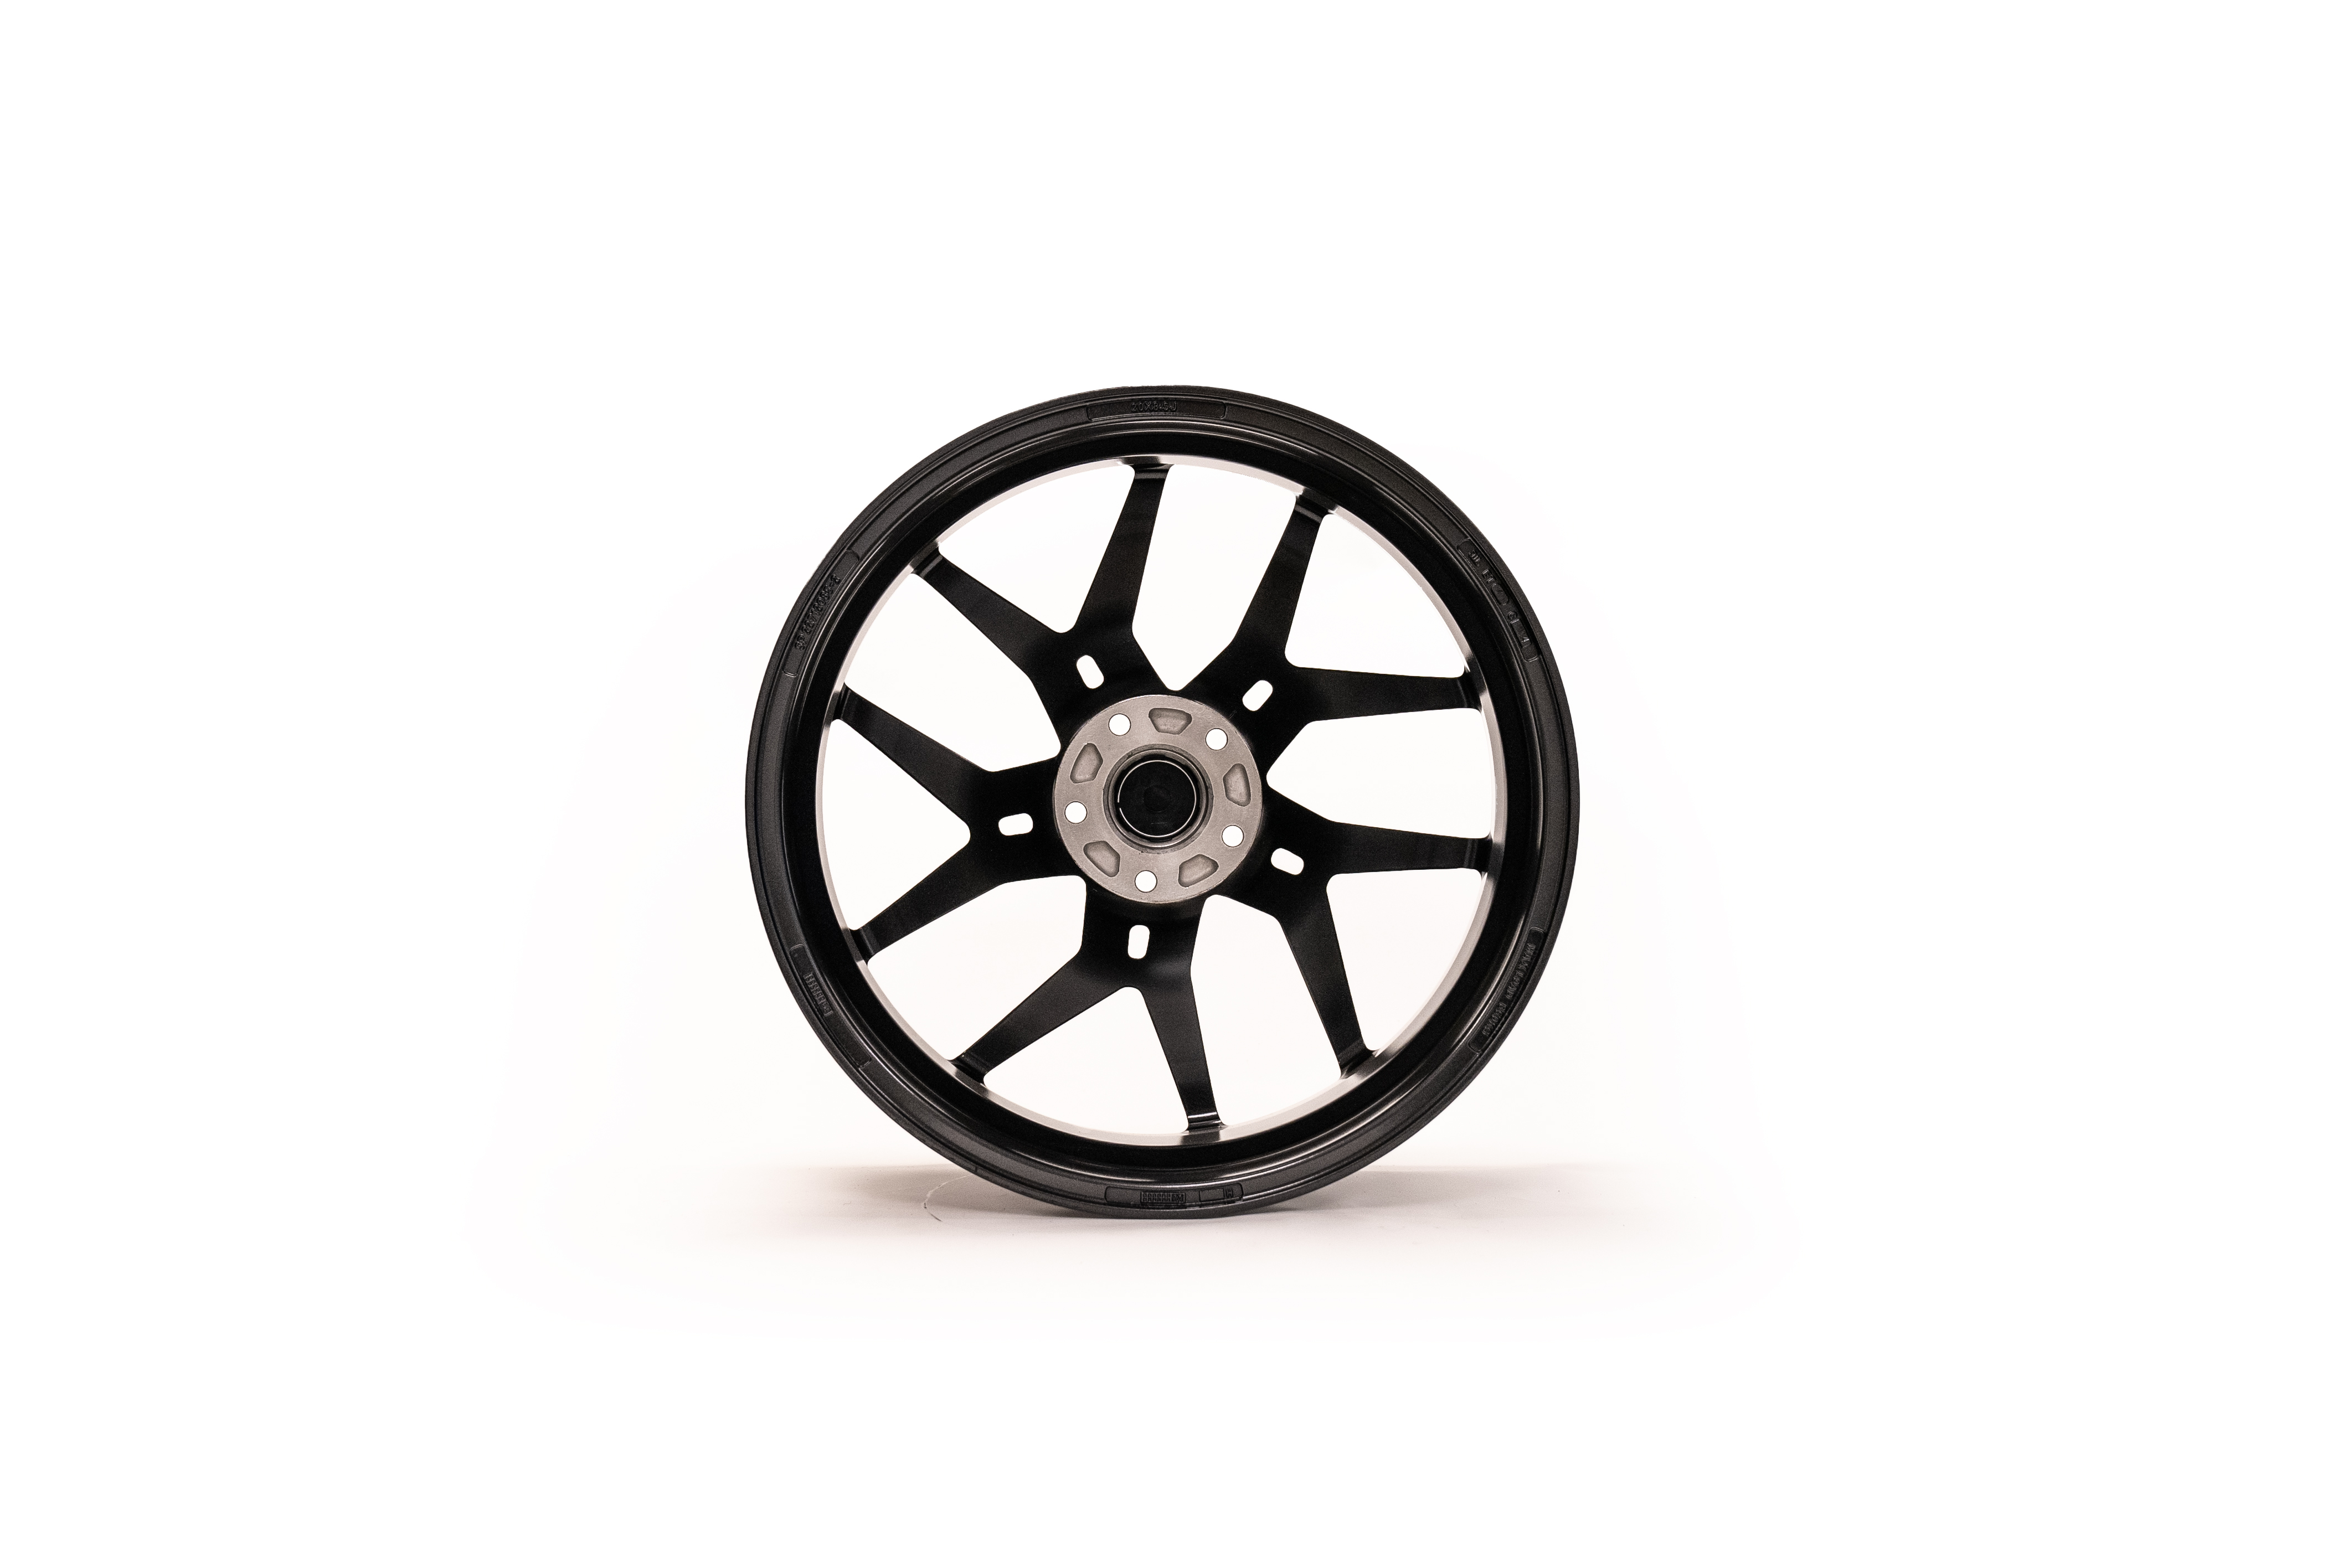 LV-3 Alloy Wheel – We Take a Closer Look